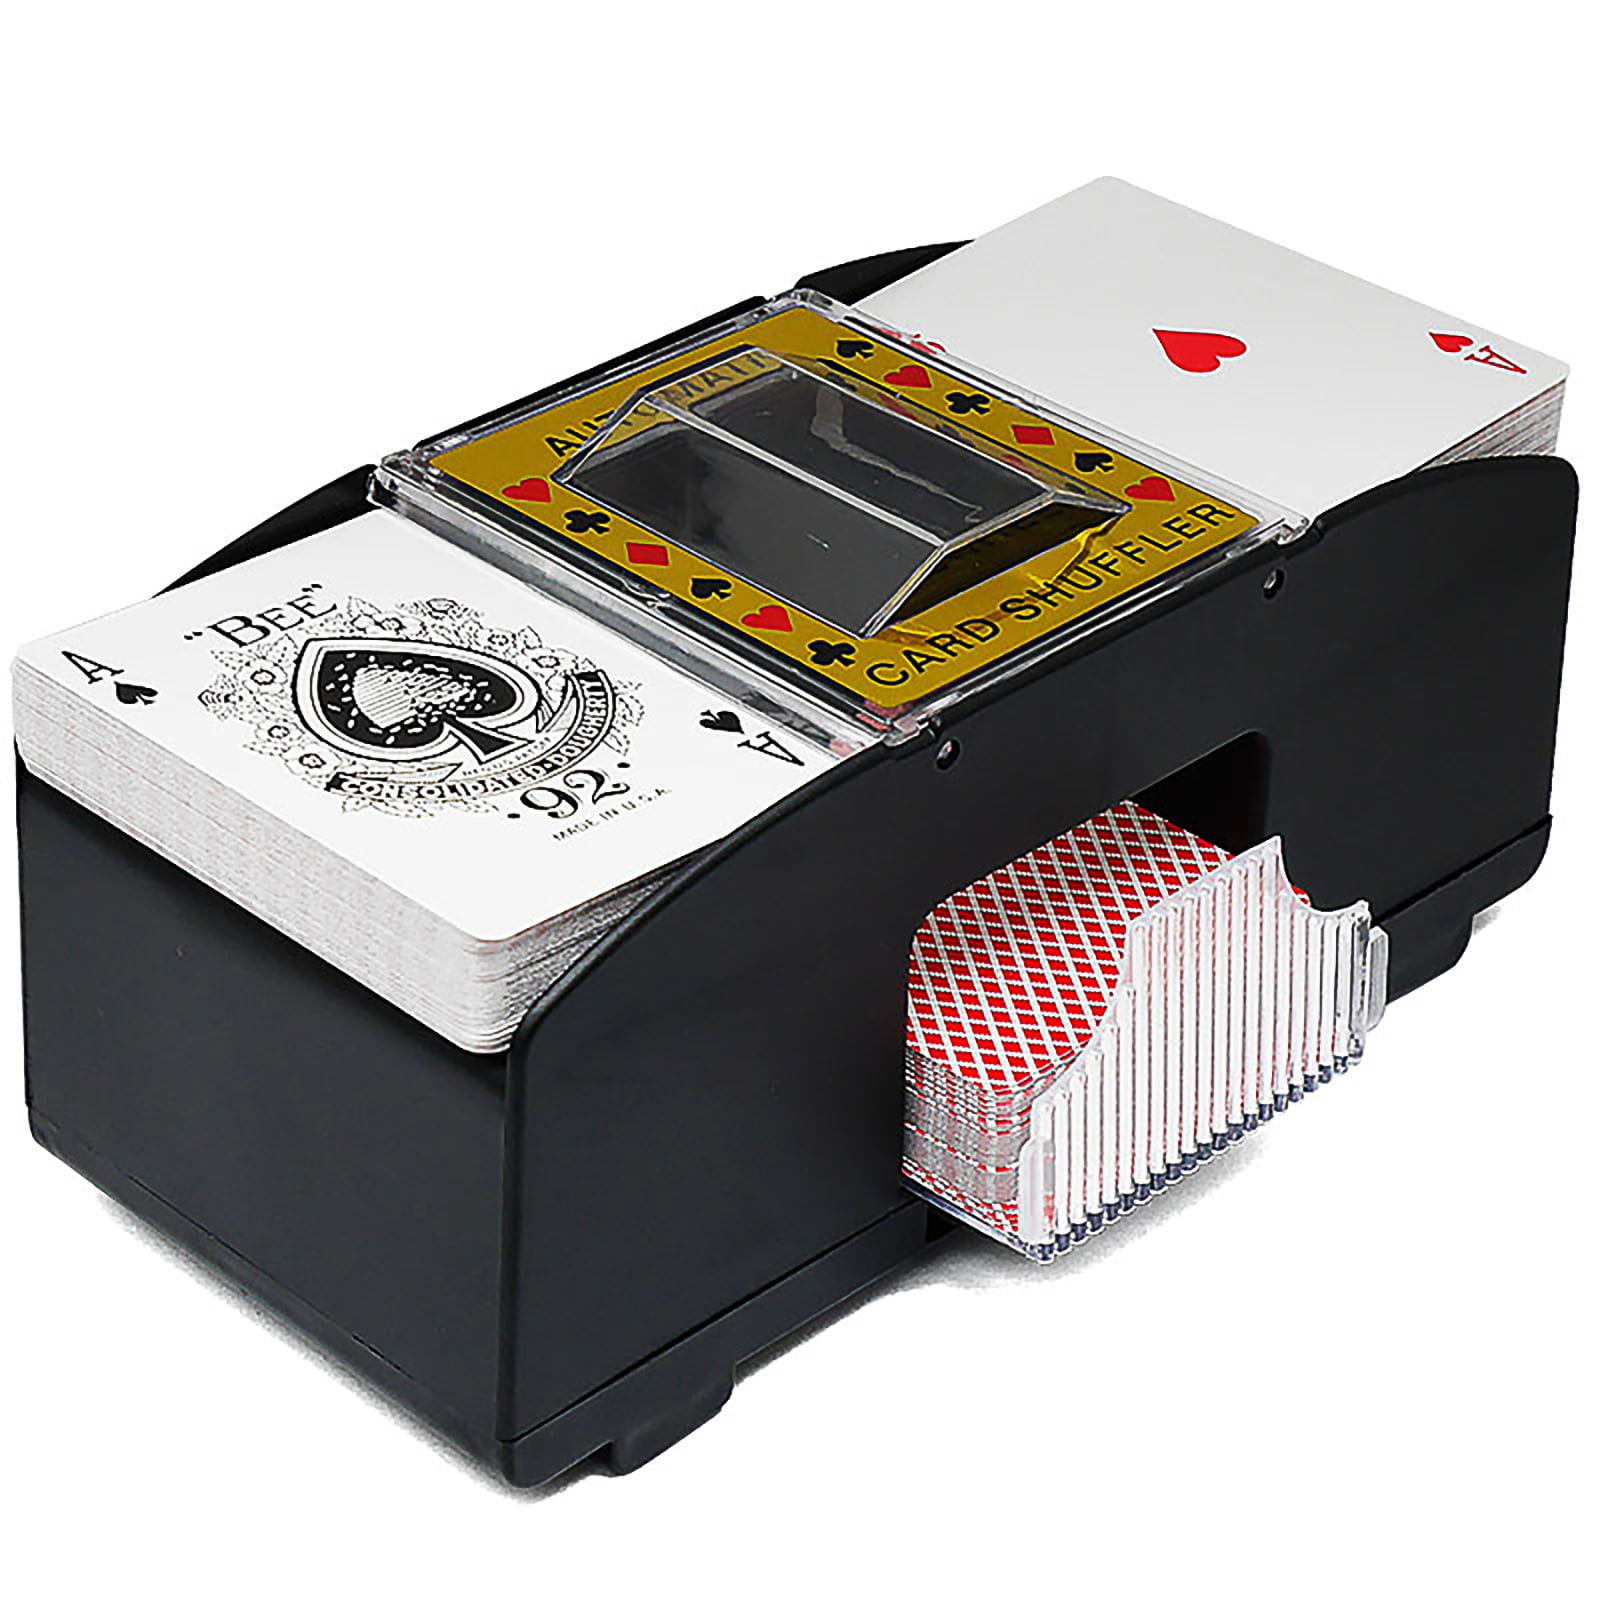 SPGHOME Automatic Poker Card Shuffler Electronic Poker Card Shuffling Machine Battery Operated Cards Playing Tool for Casino Poker 